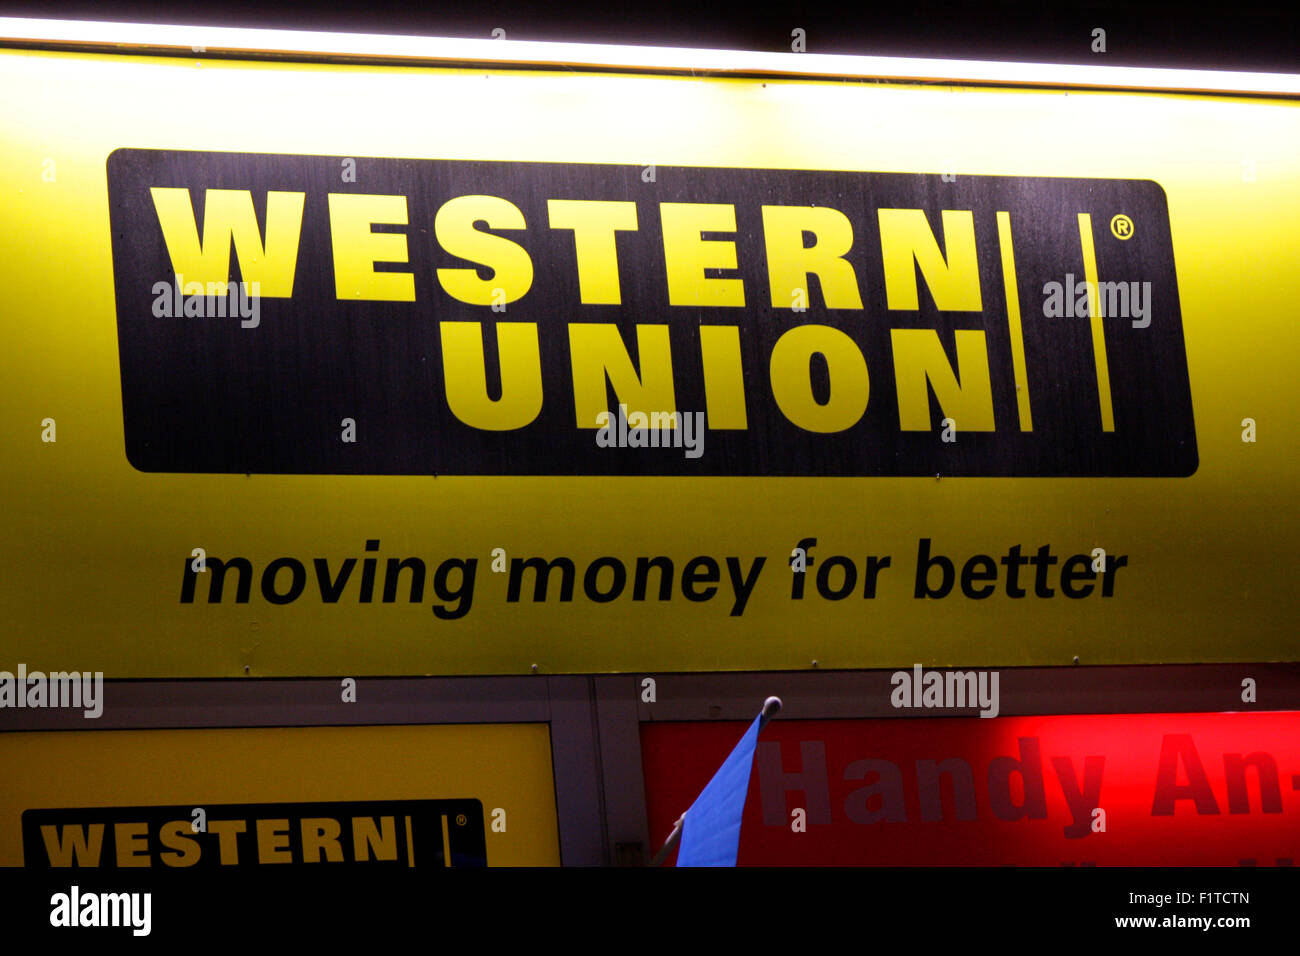 Markenname: "Western Union", November 2013, Berlin Stock Photo - Alamy